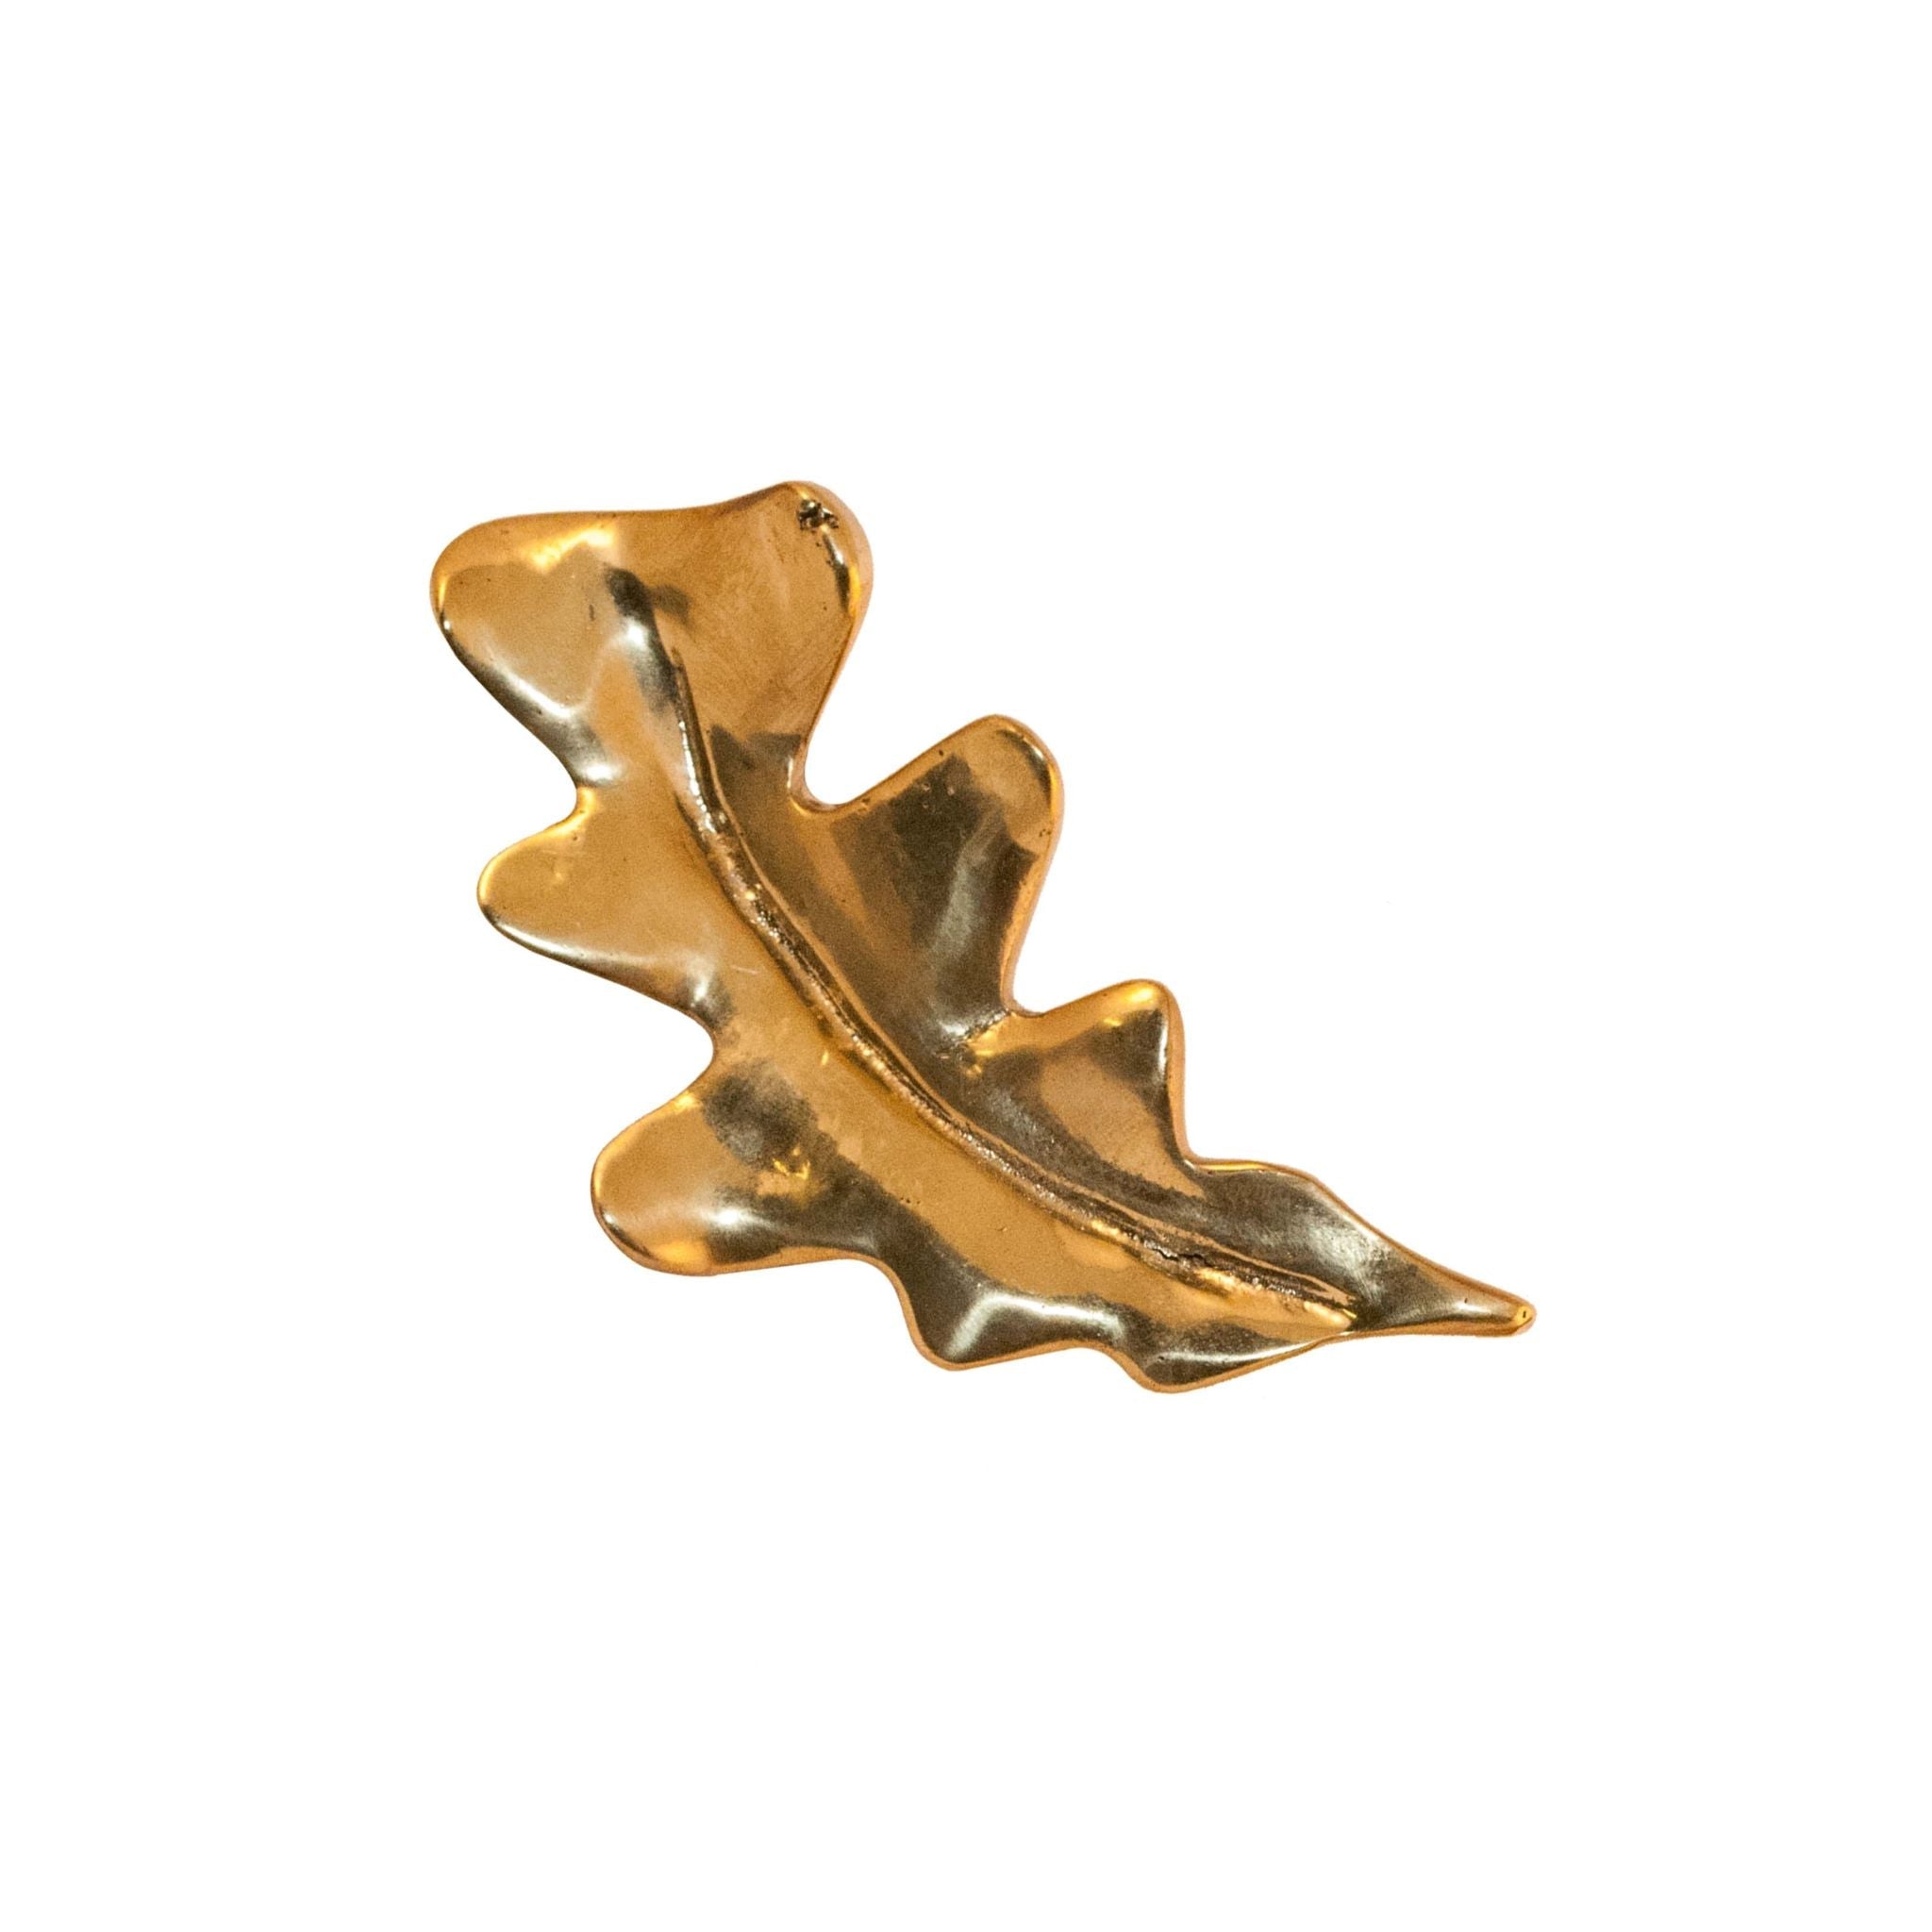 Chalet brass oak leaf knob - ilbronzetto